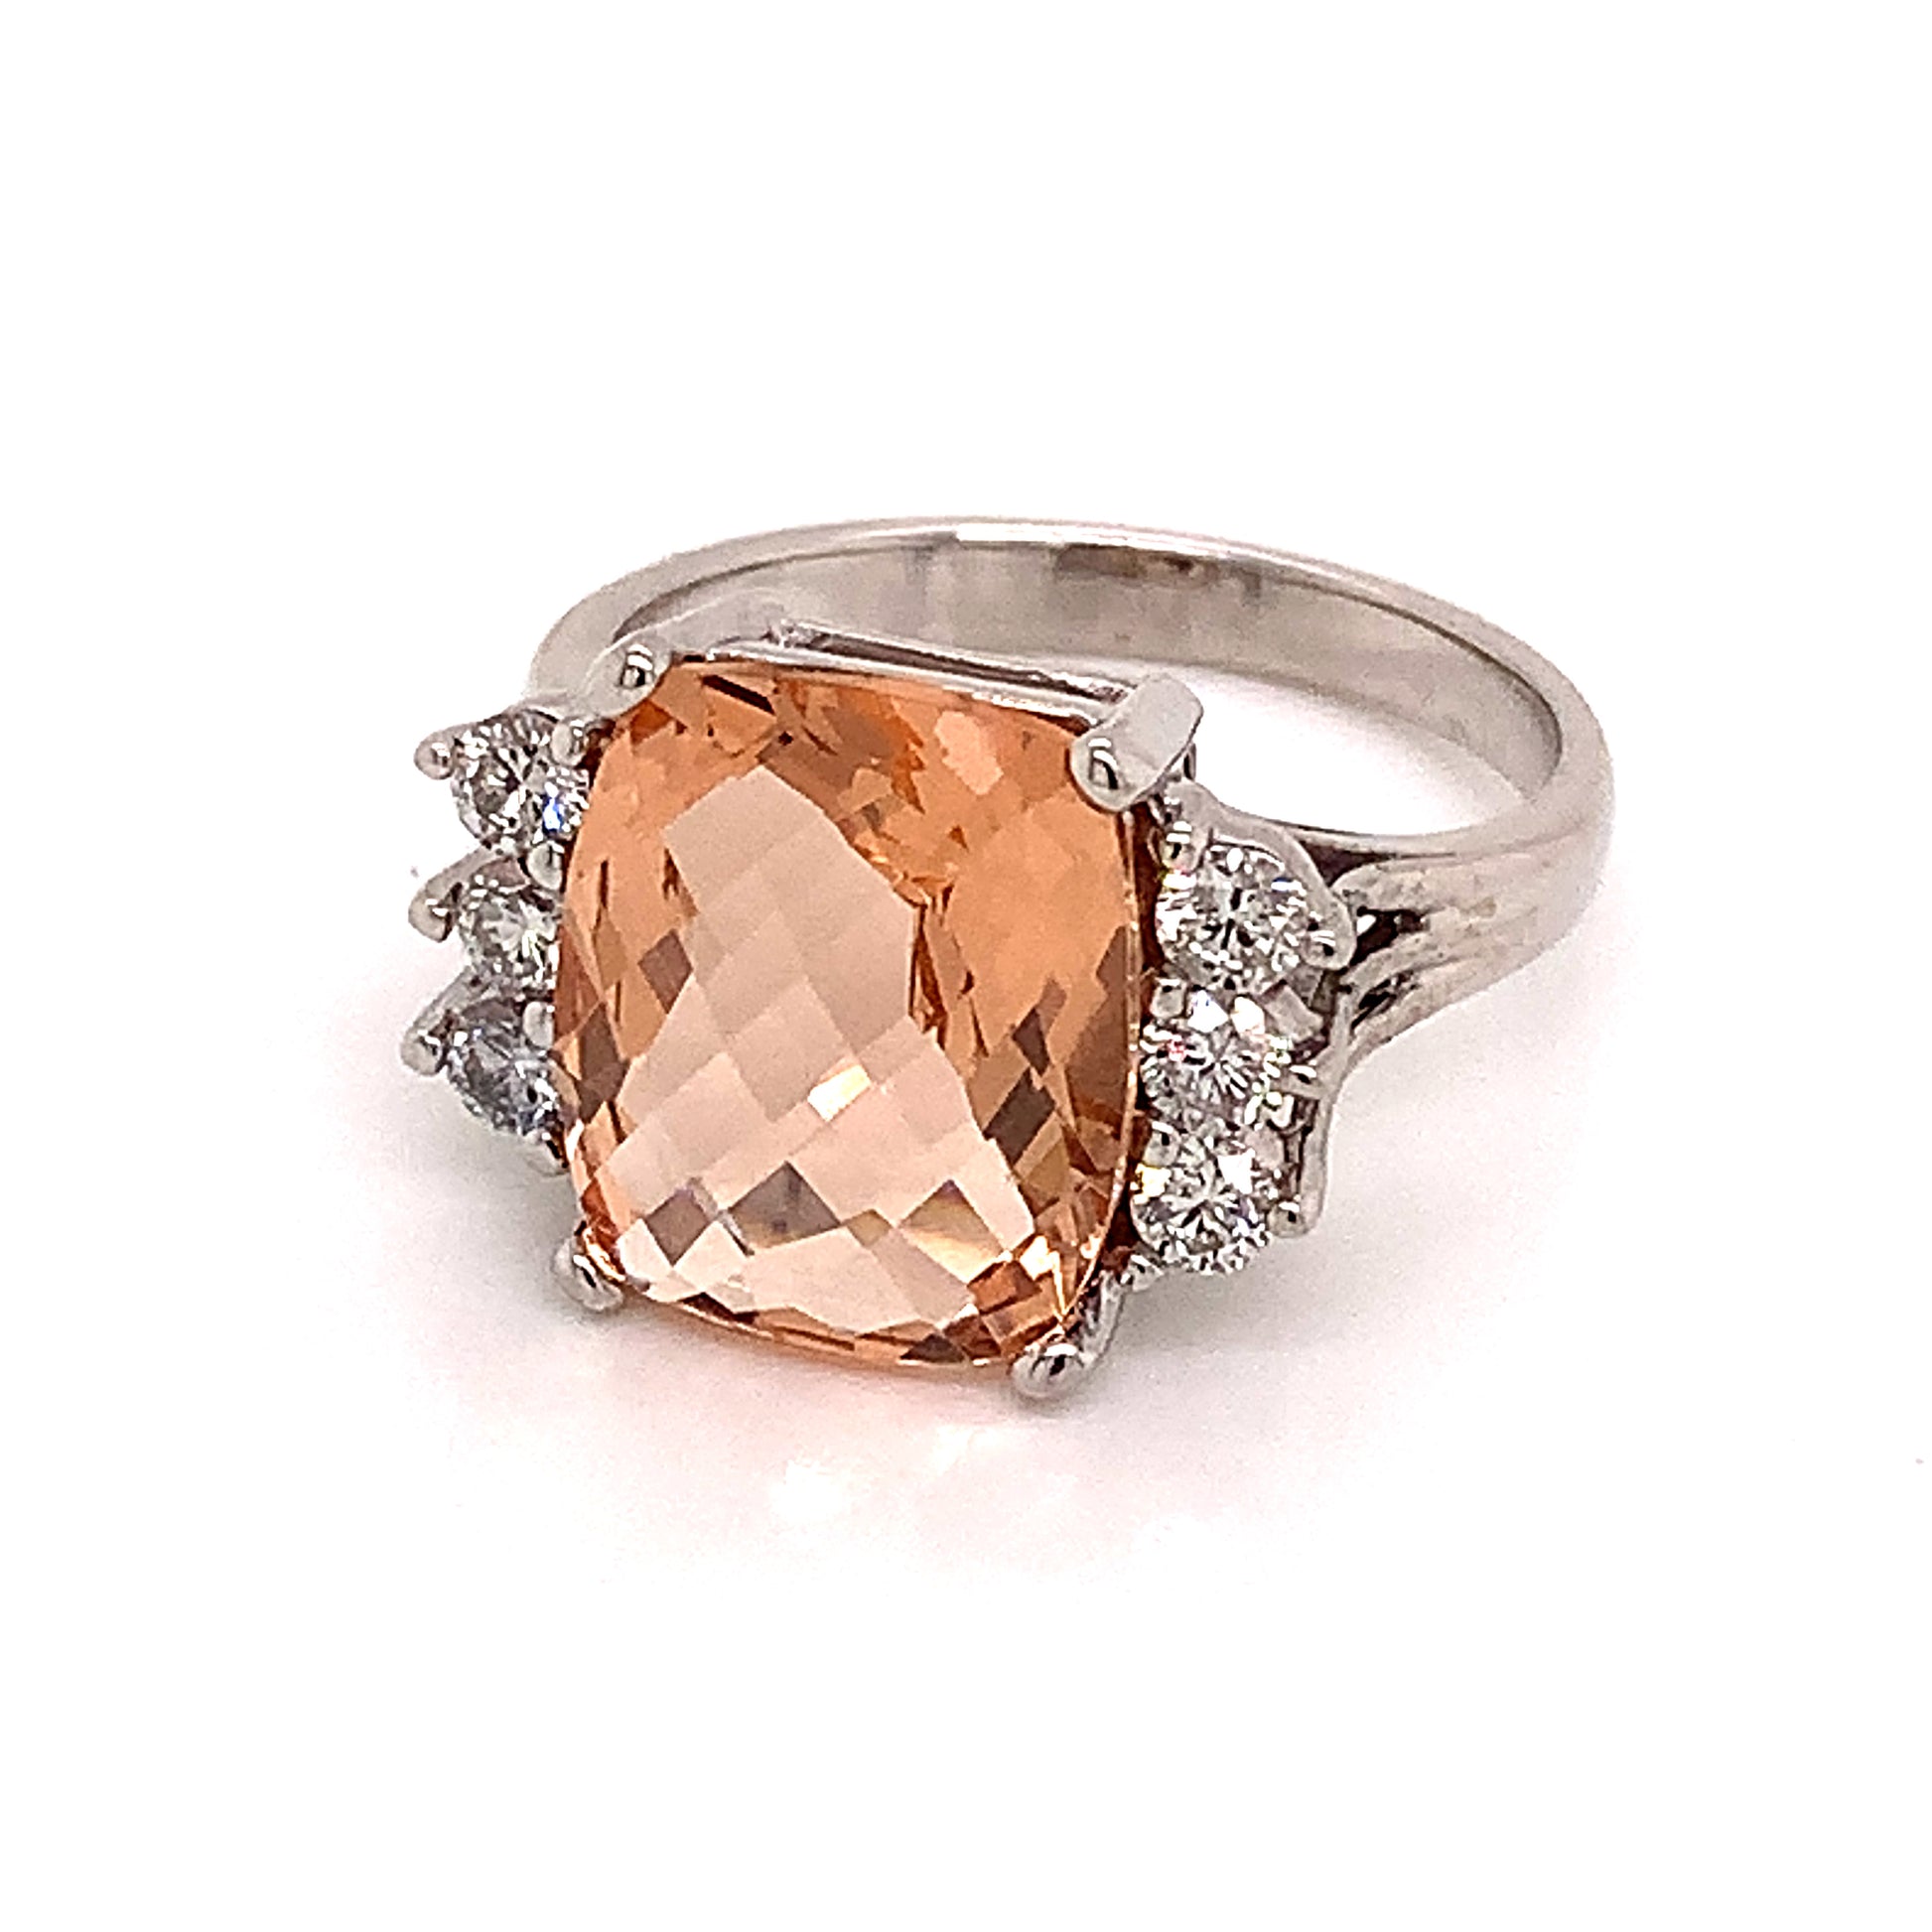 Diamond Morganite Ring Size 7.25 14k Gold 5.60 TCW Certified $5,950 120600